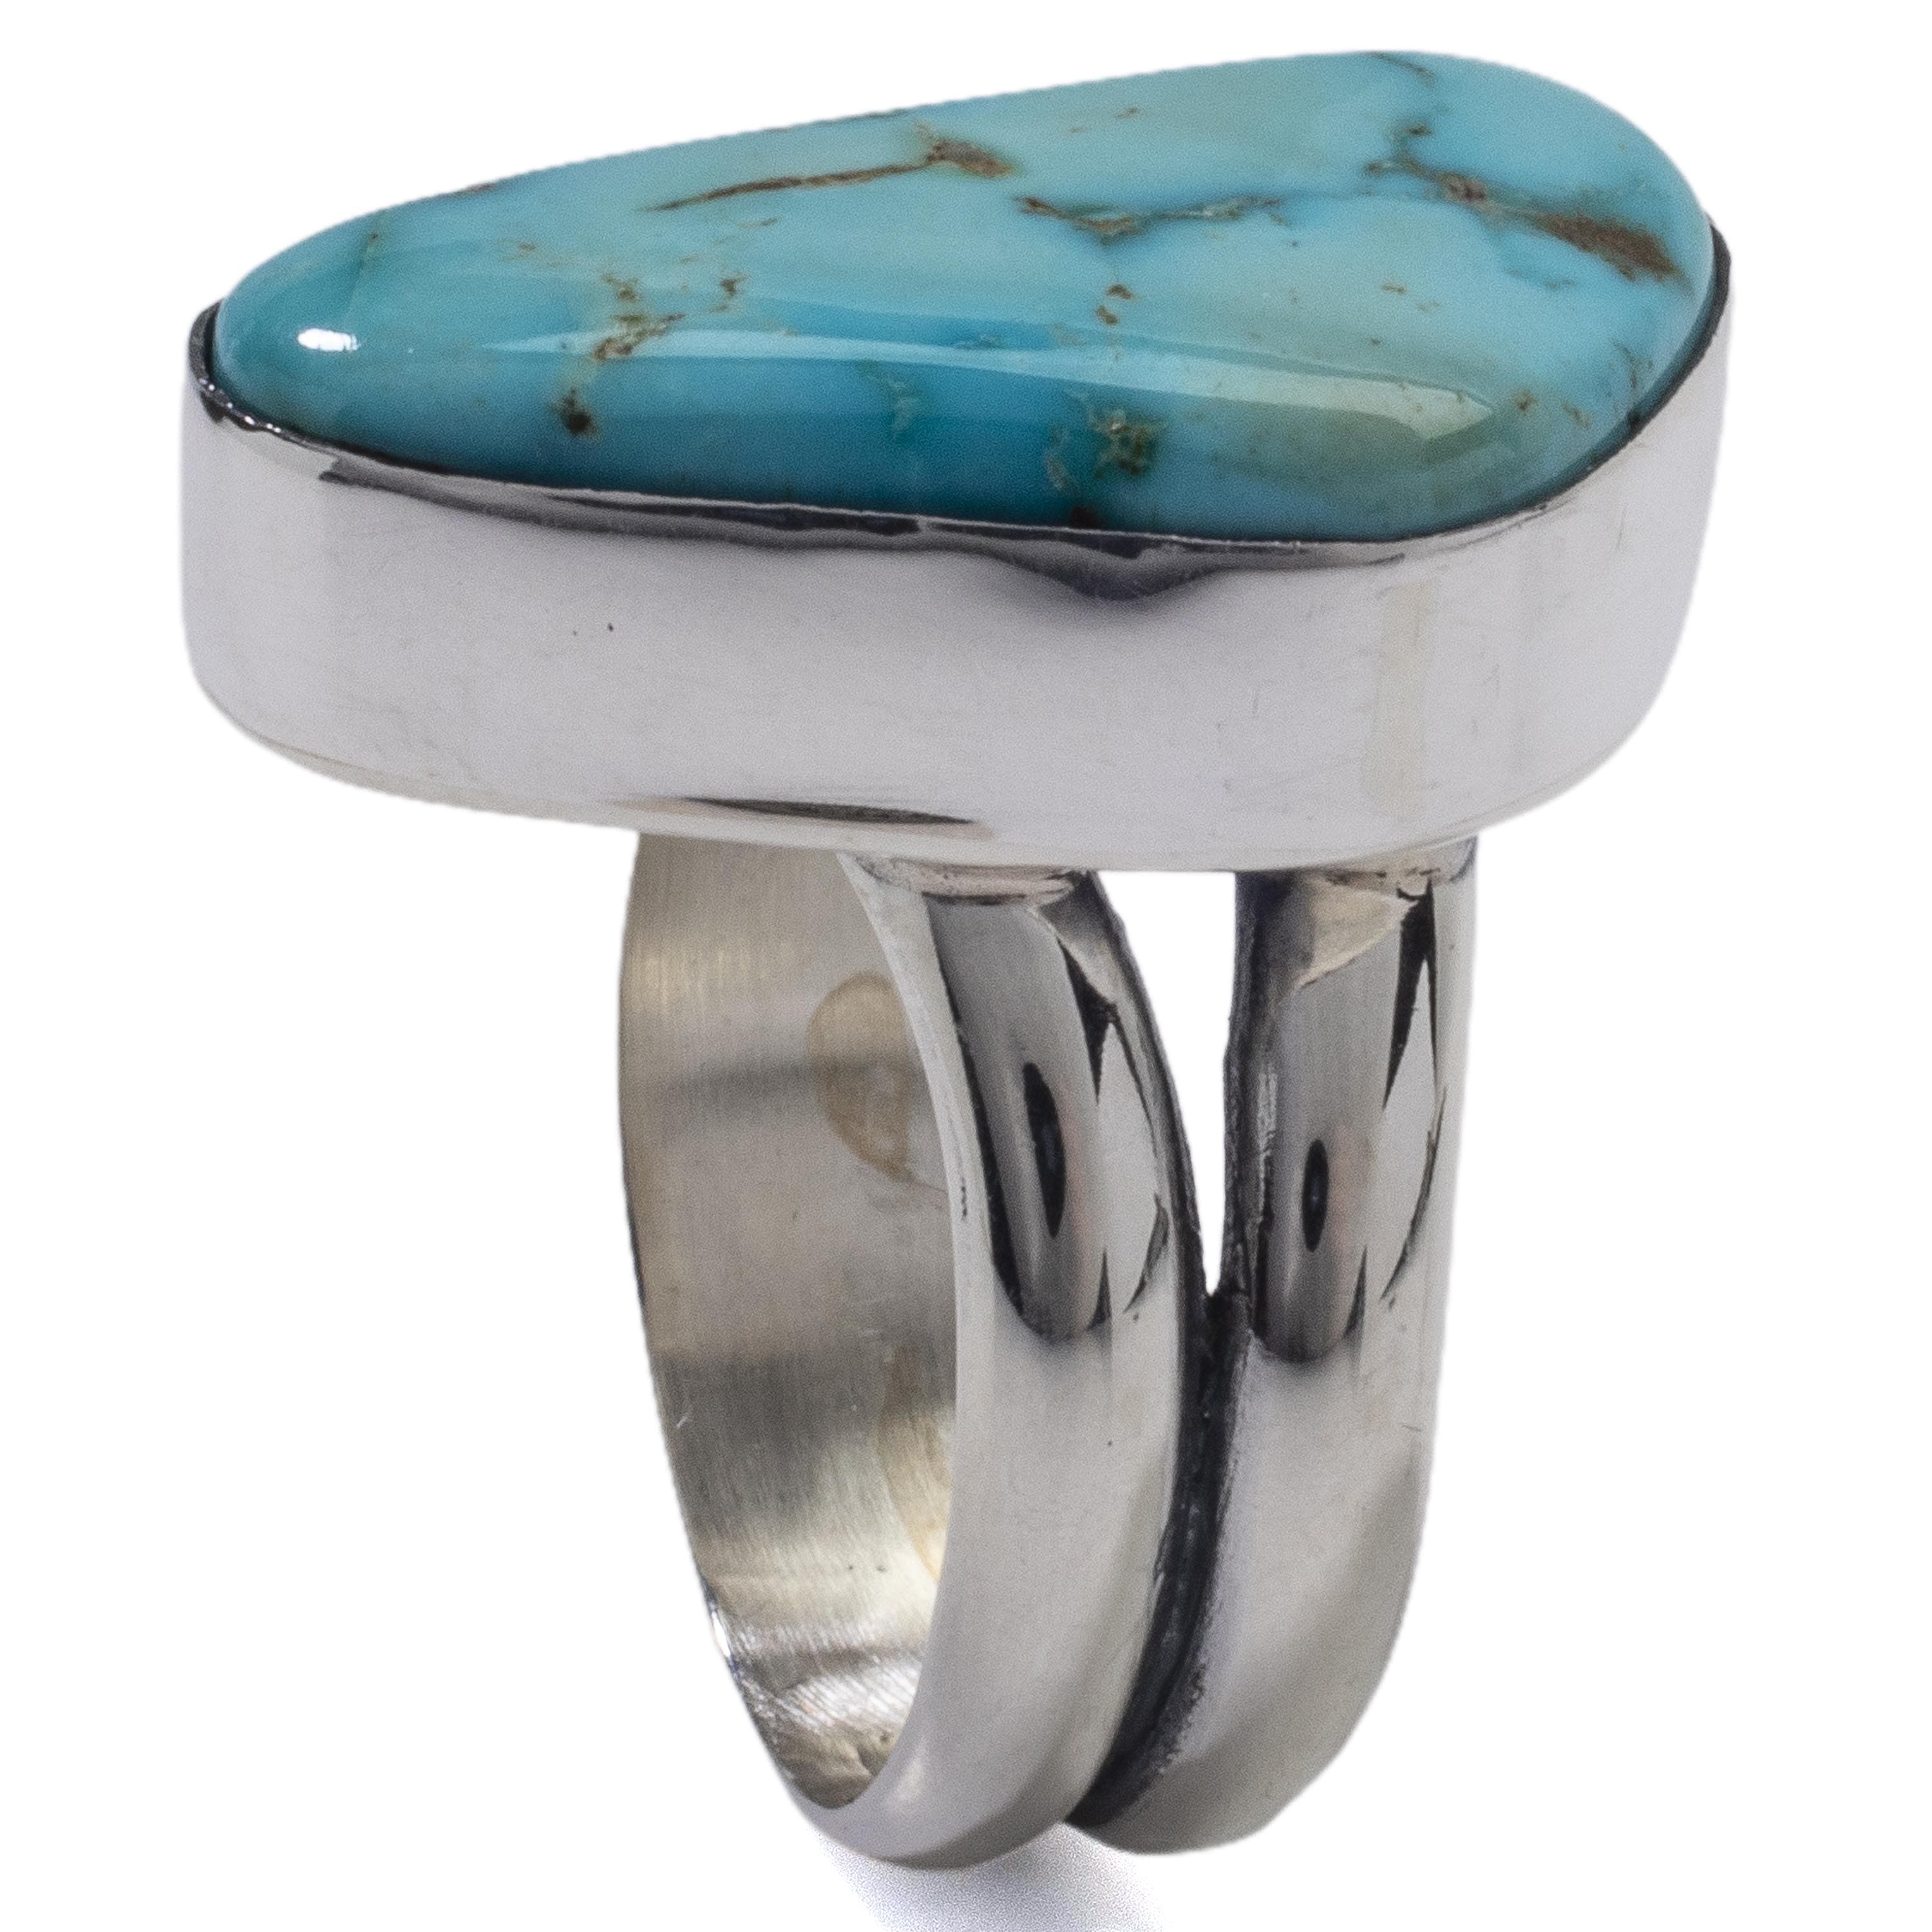 Kalifano Native American Jewelry 8 King Manassa Turquoise USA Handmade 925 Sterling Silver Ring NAR500.050.8